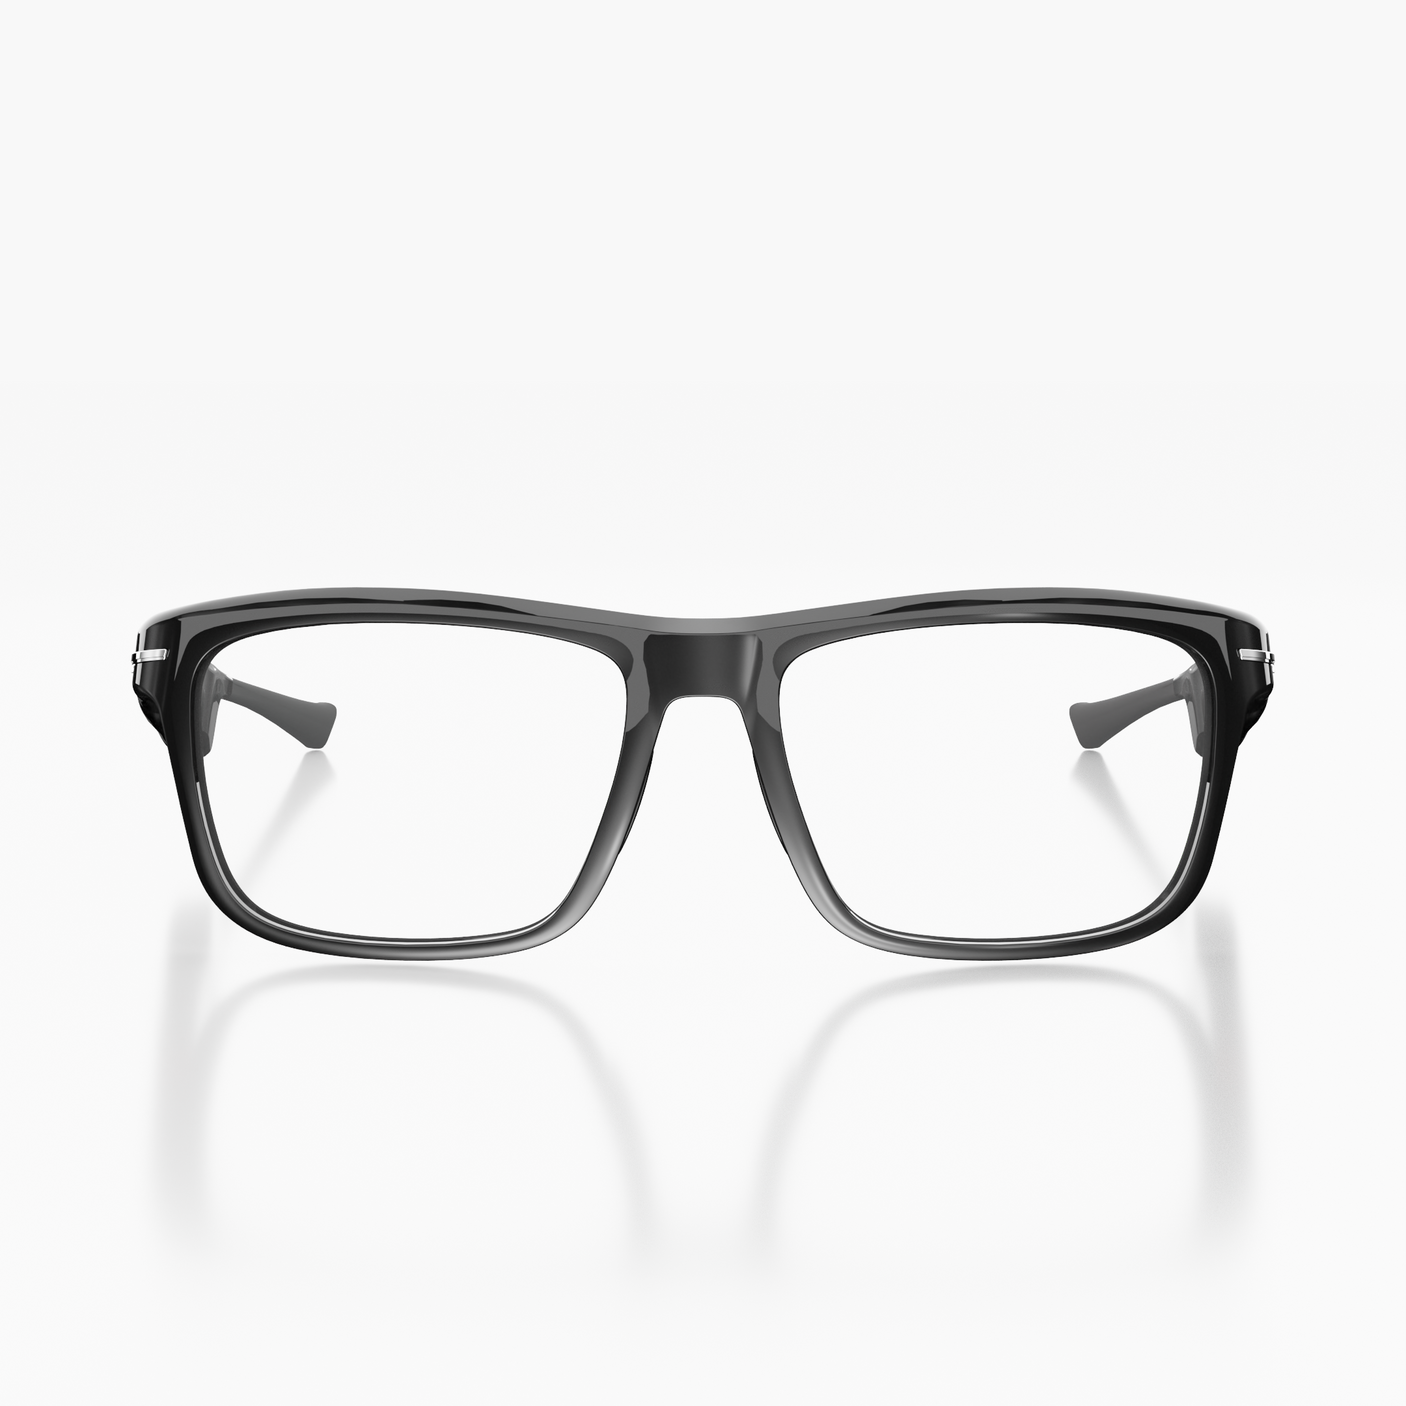 Argon X Photochromic Smartglasses | solos AirGo™ 3